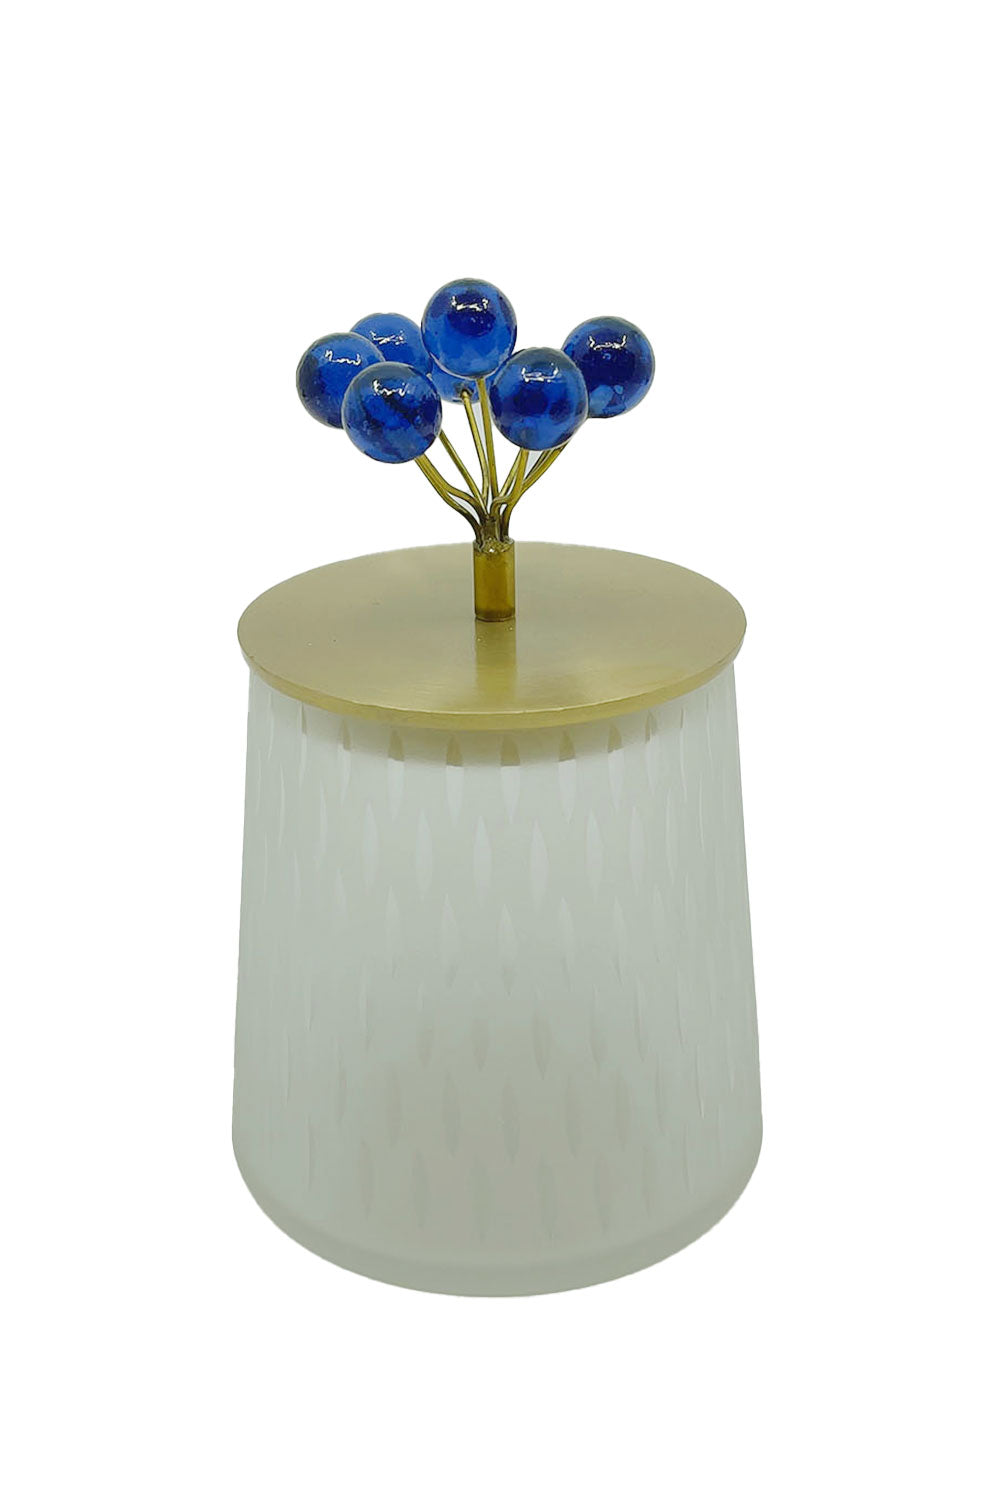 Rice Bonbon Jar with Lid, Small, Blue Flower